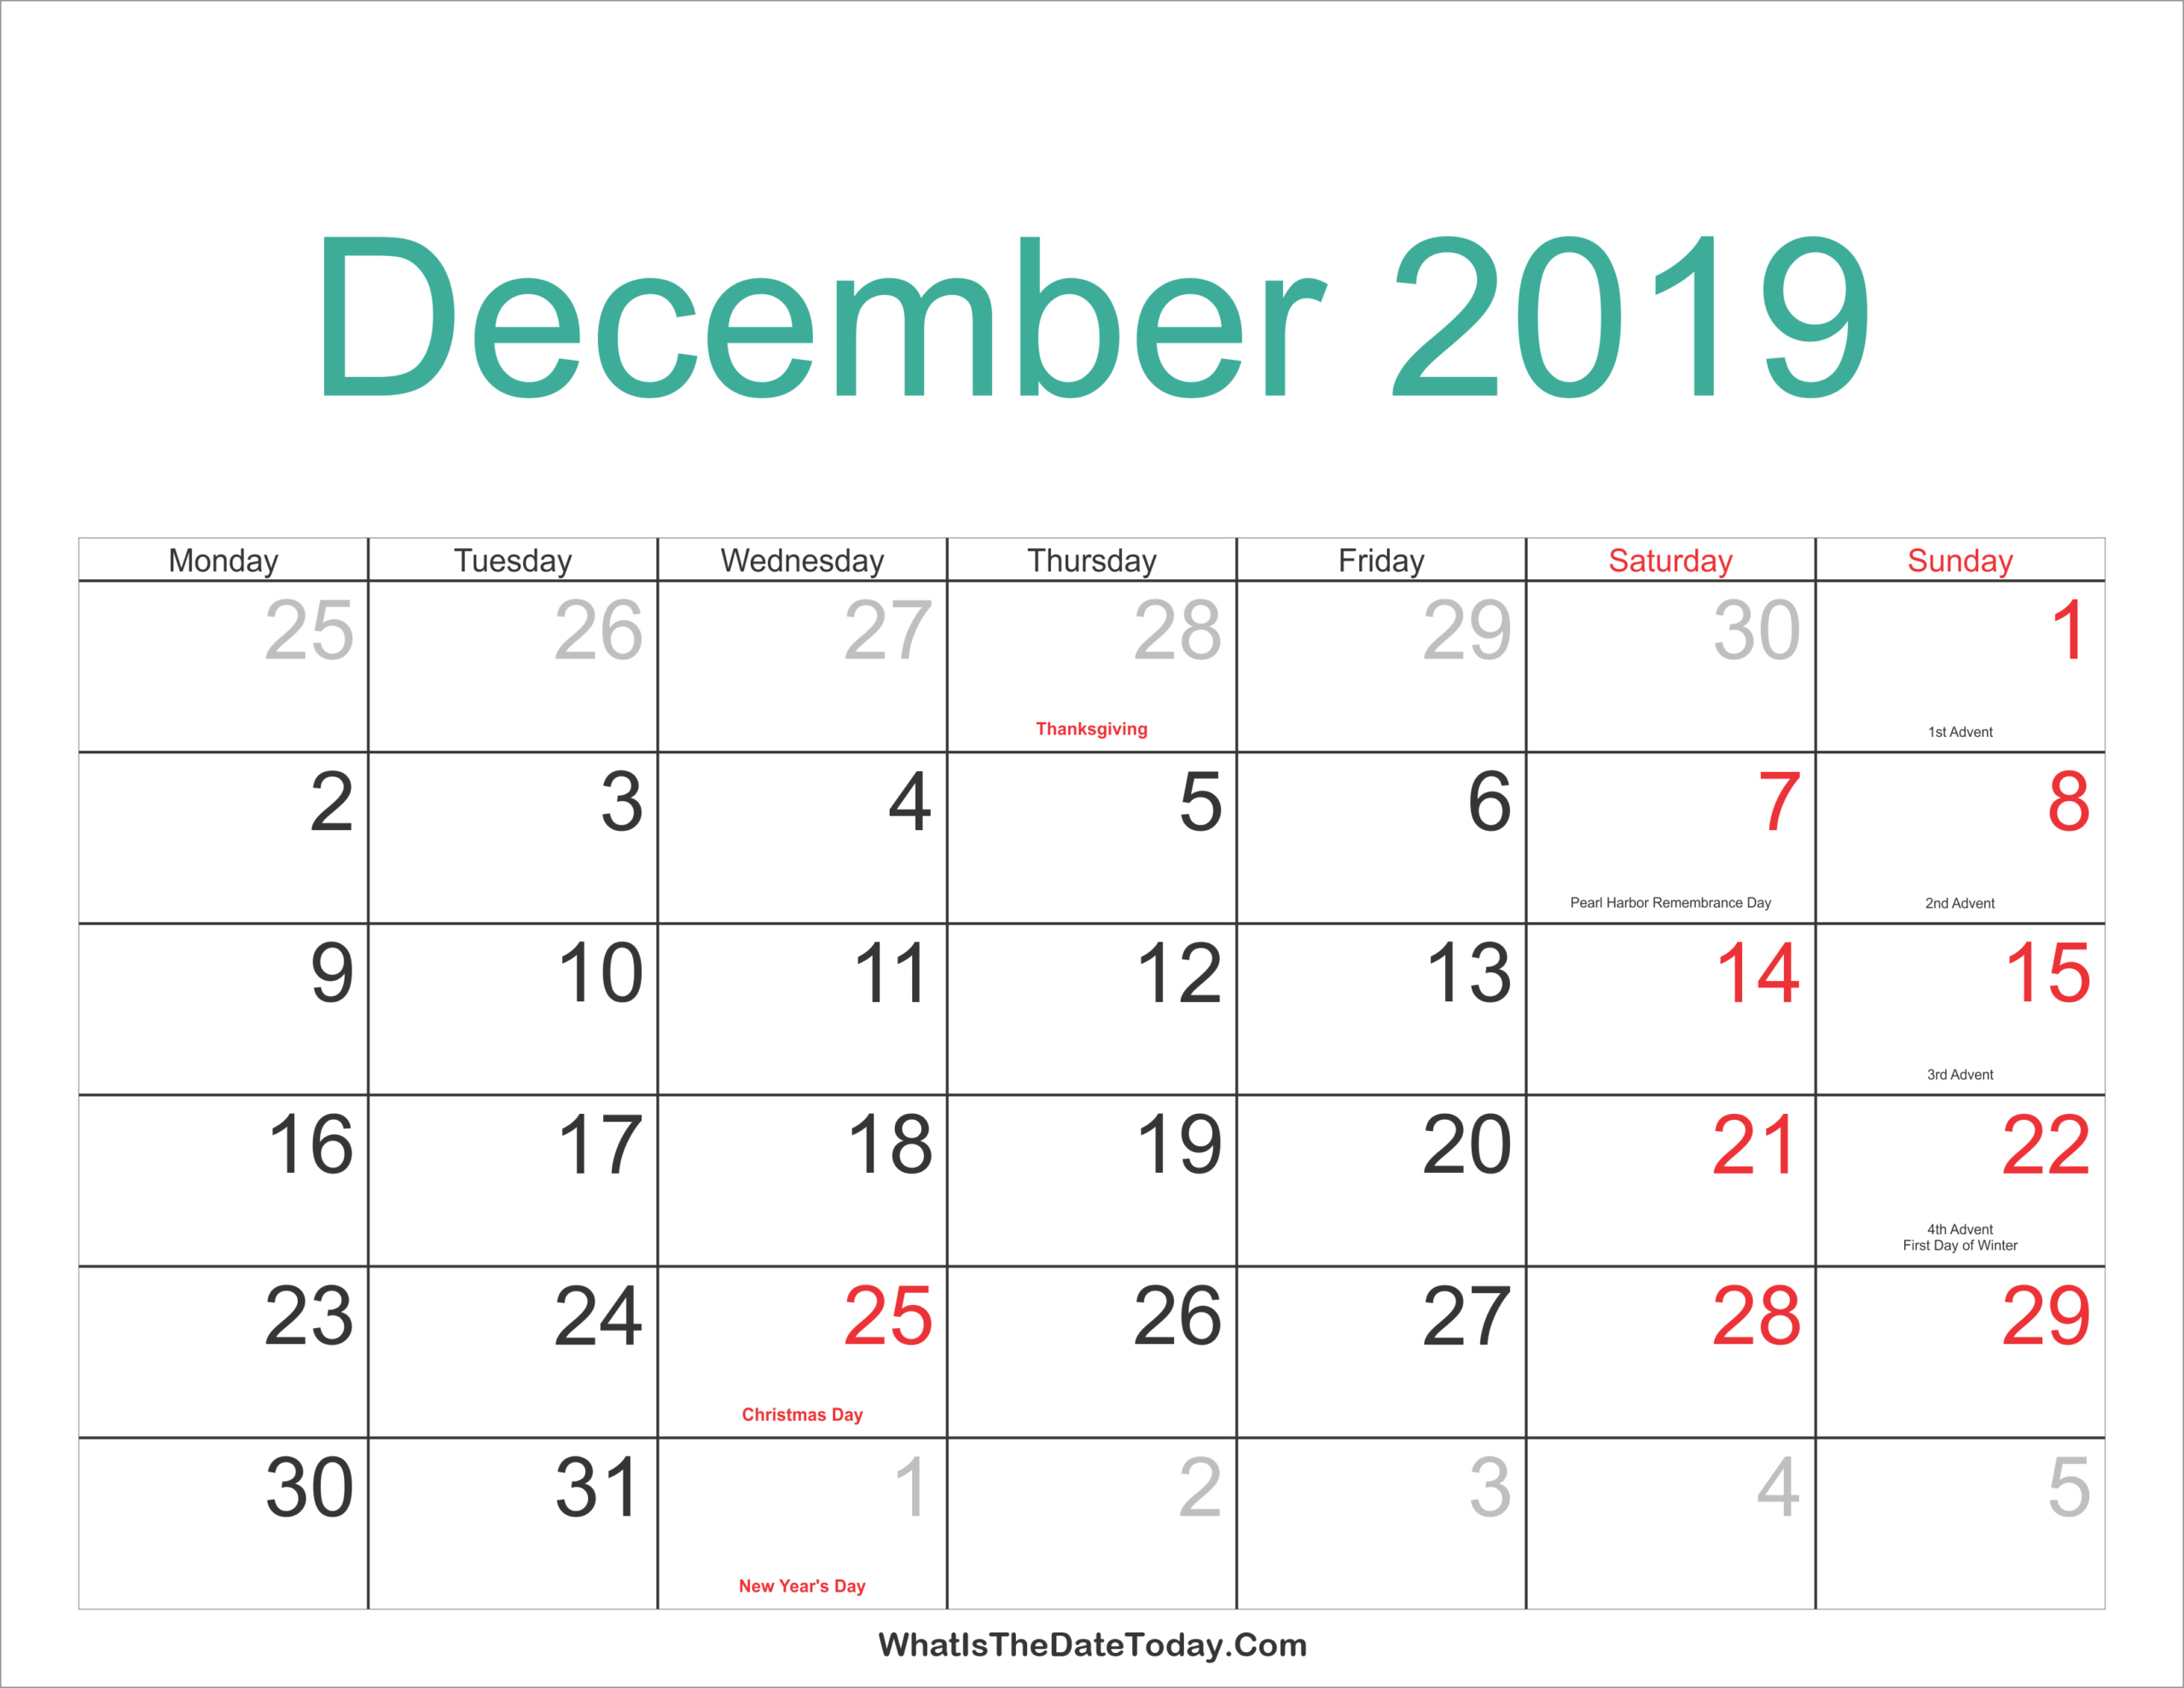 Get Tamil Monthly Calendar 2022 November